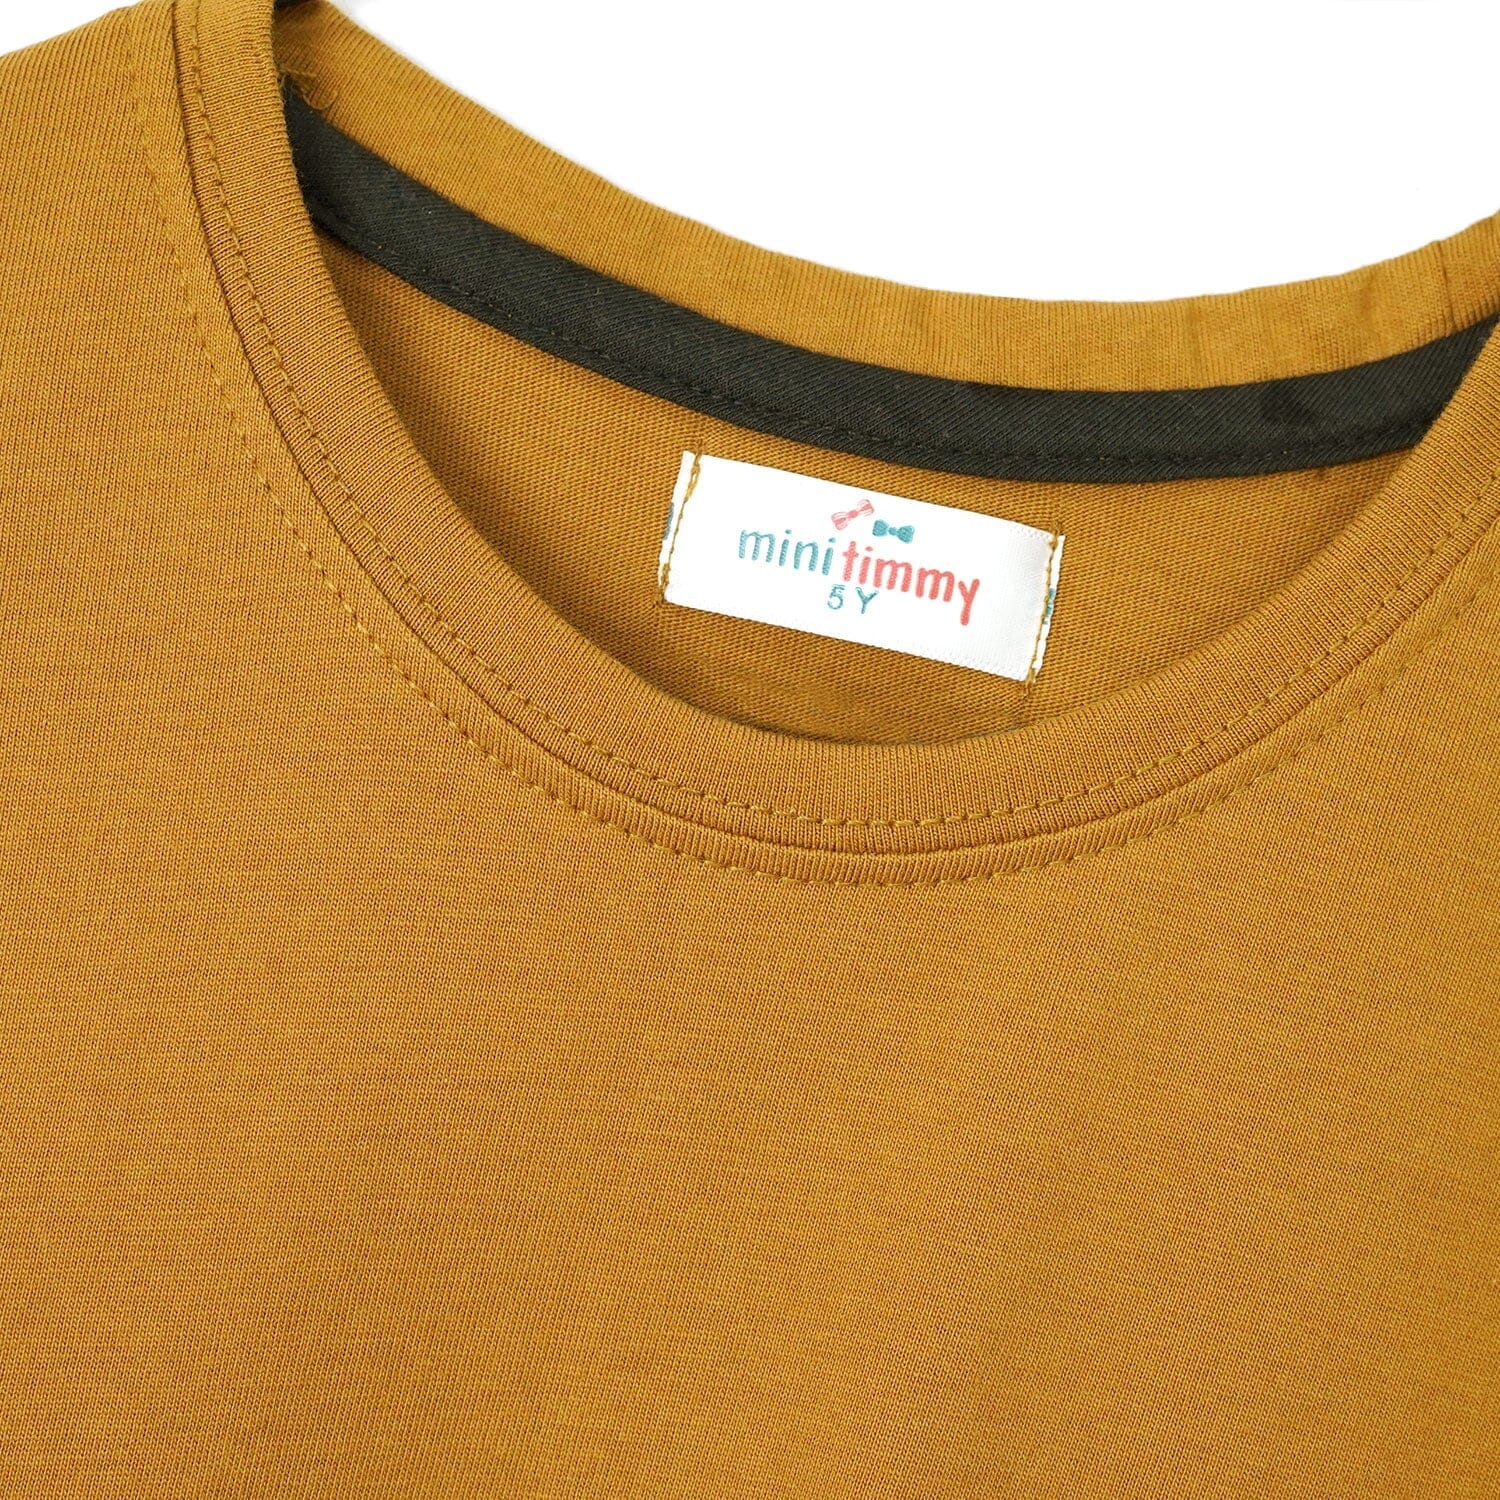 Boys Soft Cotton Graphic Mustard T-Shirt